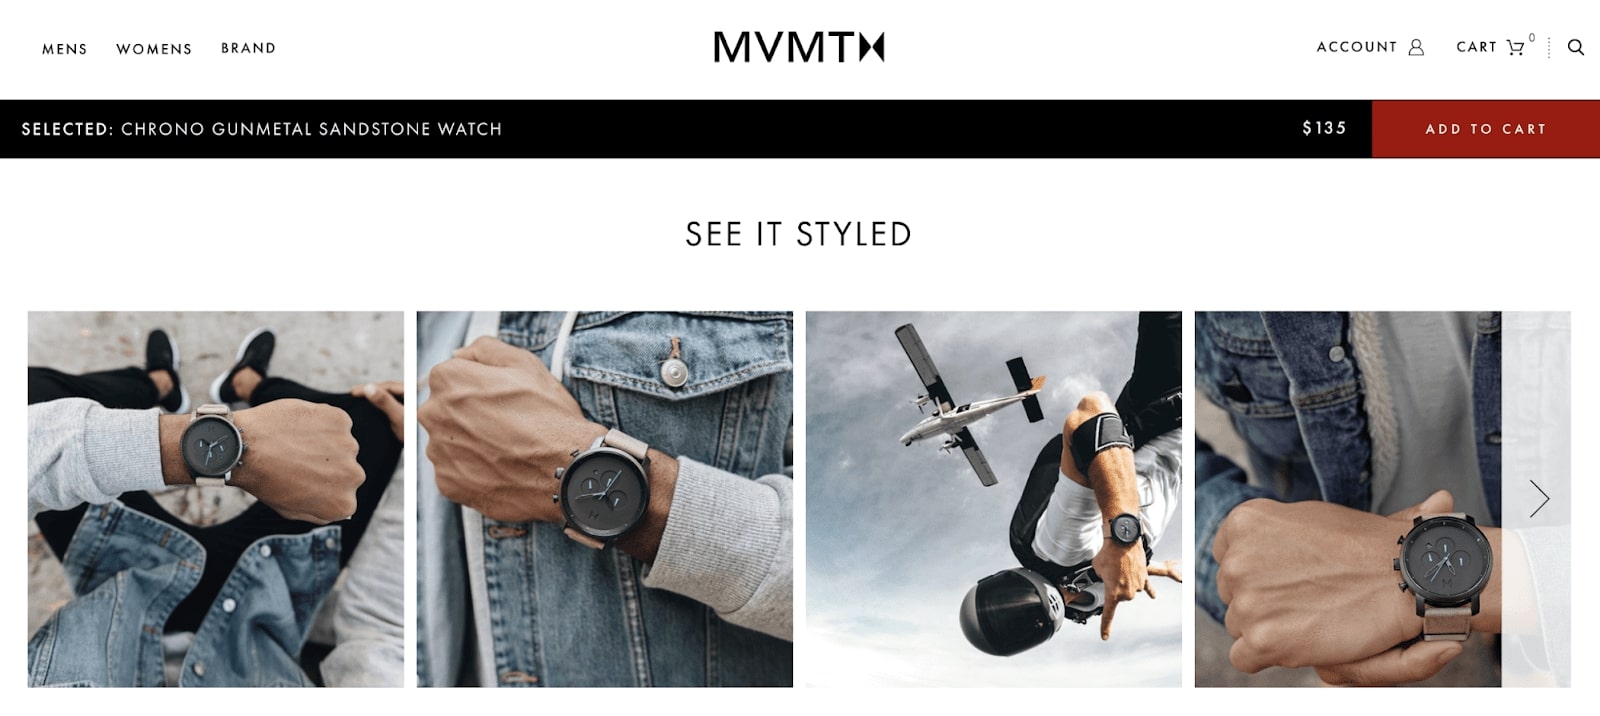 MVMT’s website